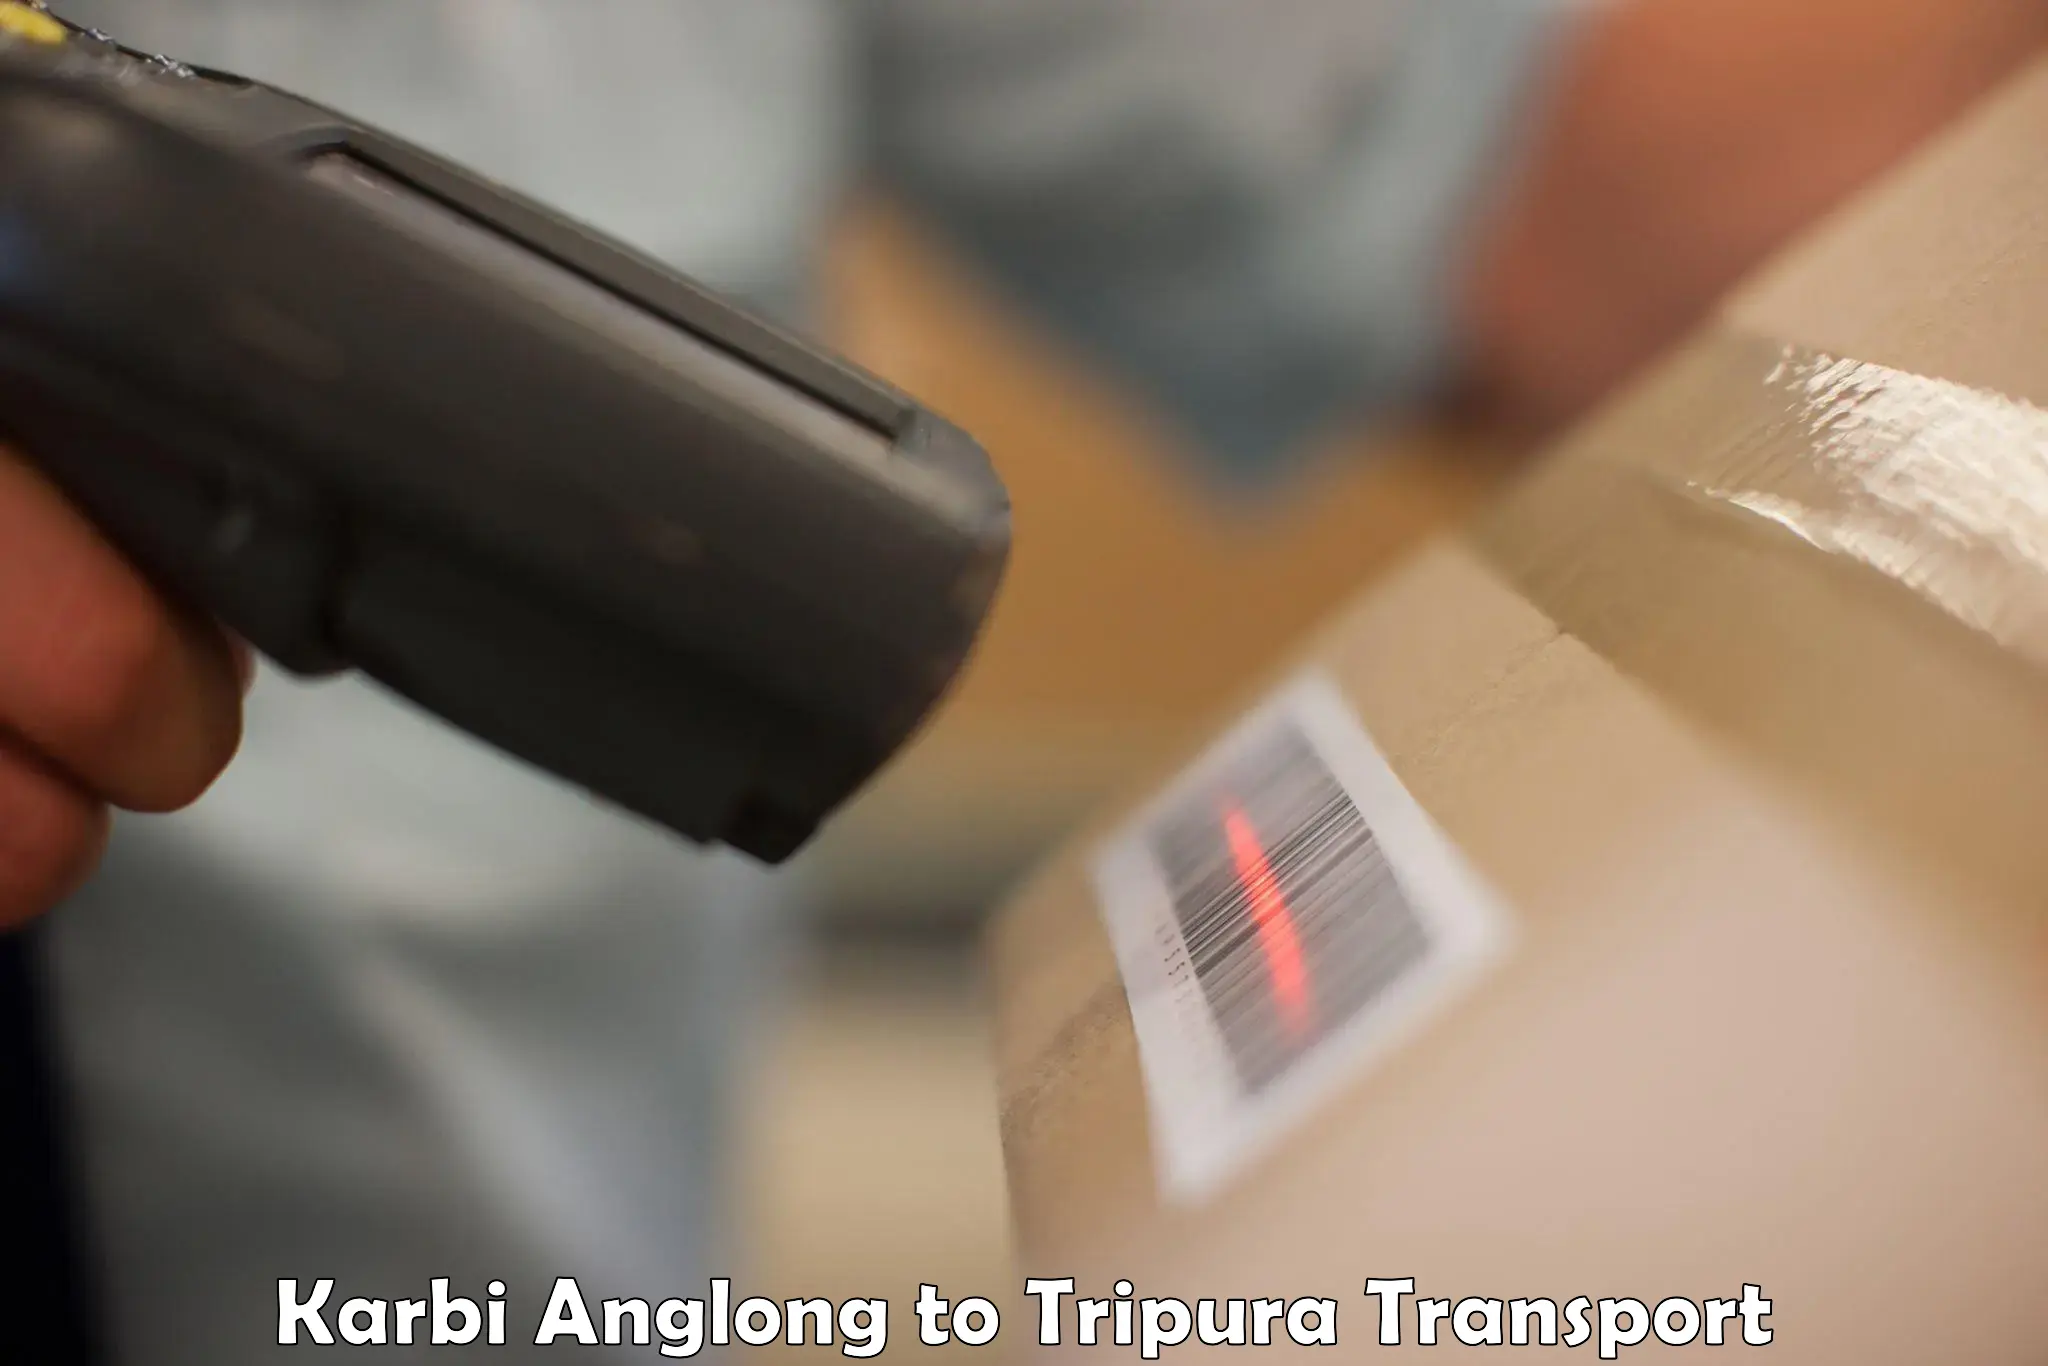 Shipping partner Karbi Anglong to Udaipur Tripura